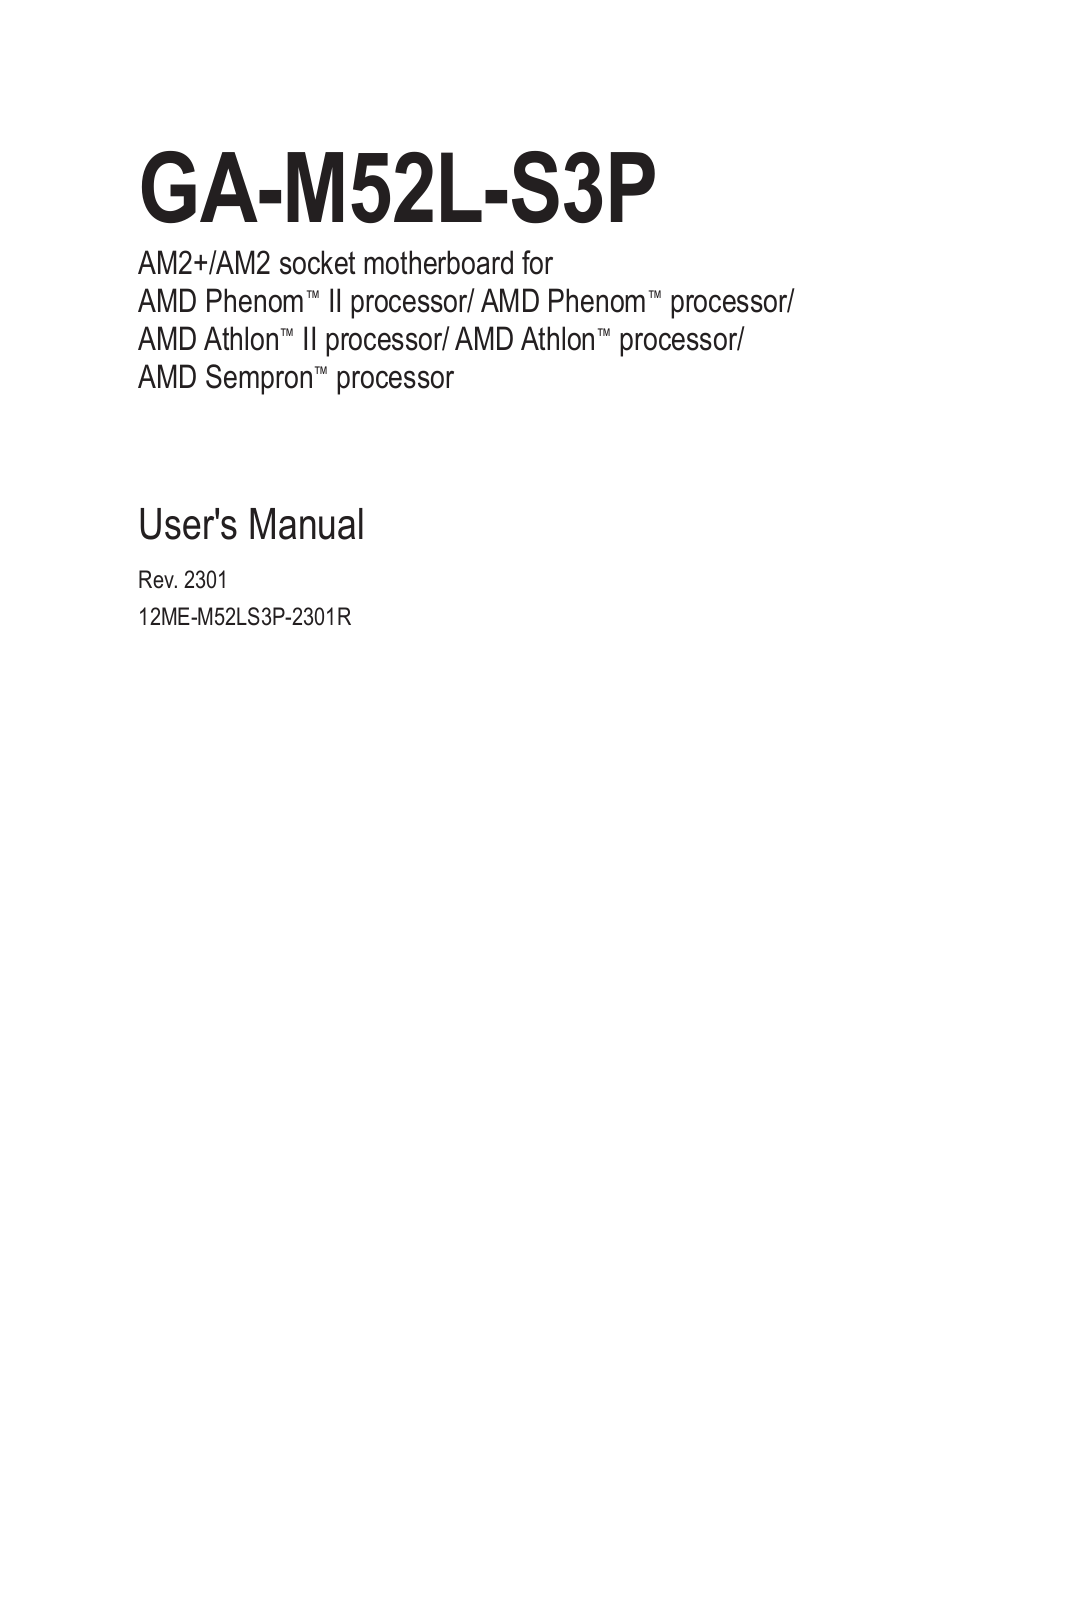 Gigabyte GA-M52L-S3P Manual